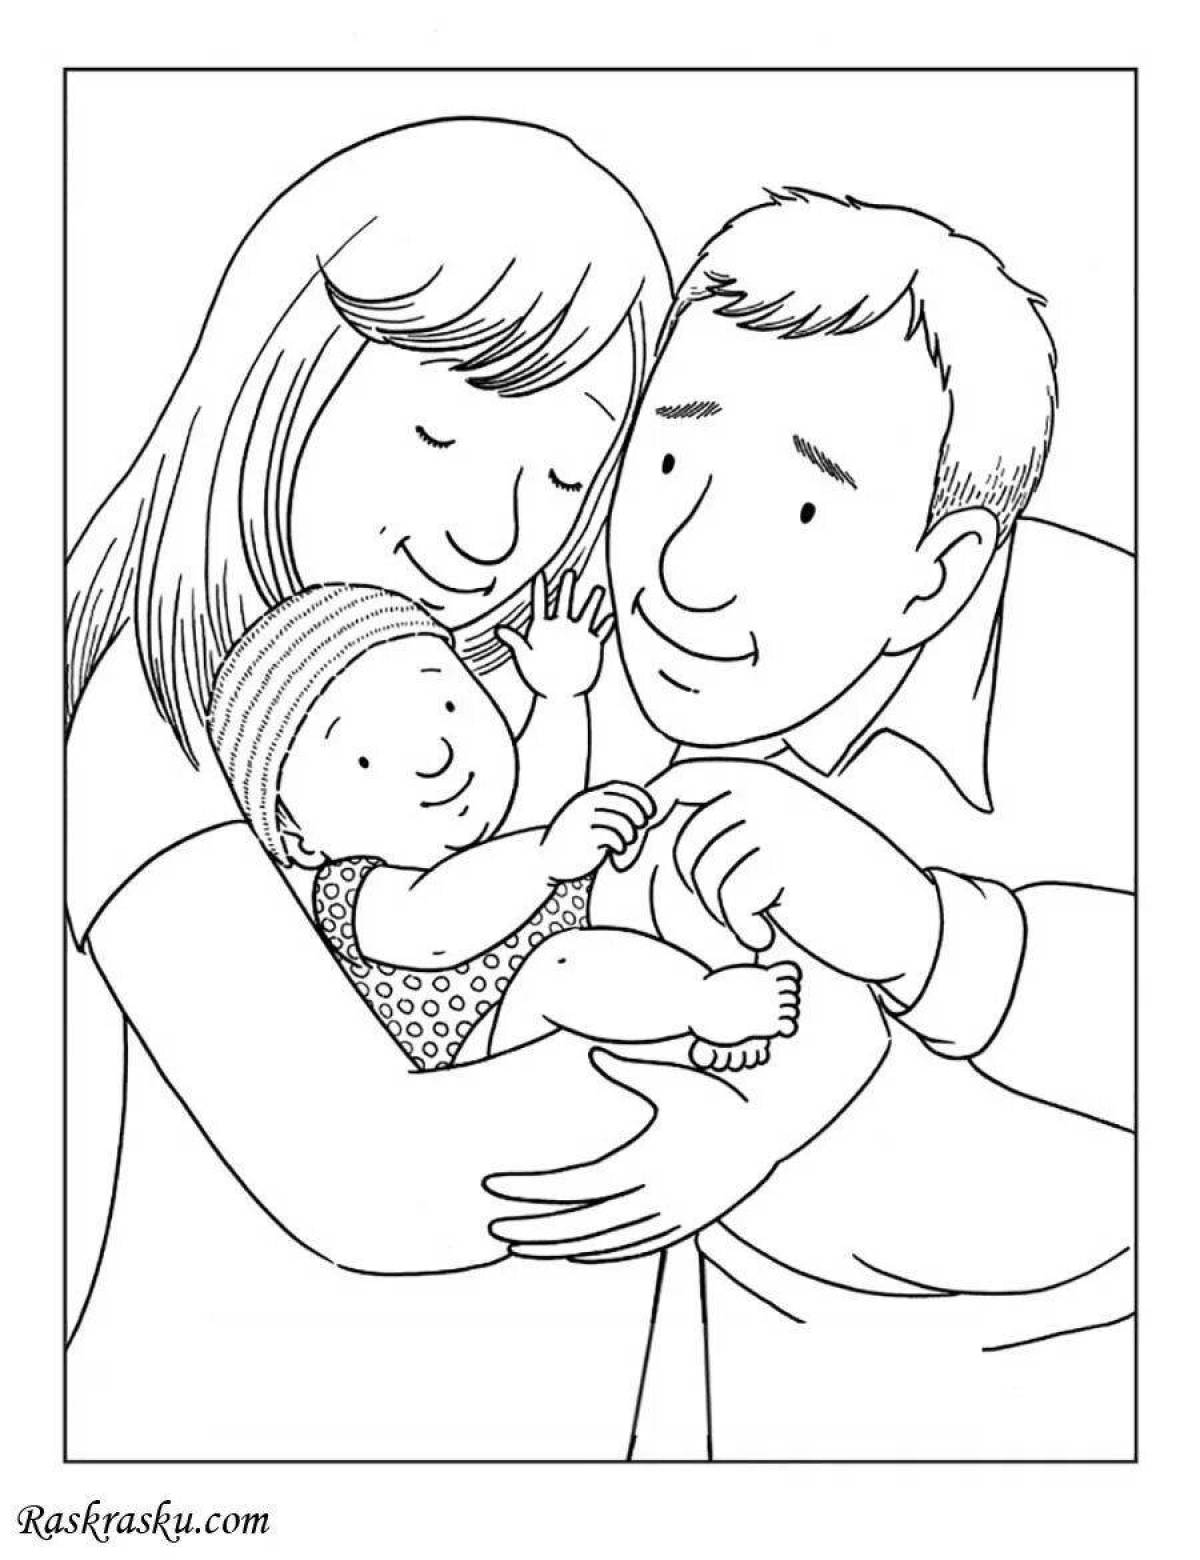 Comforting family coloring book